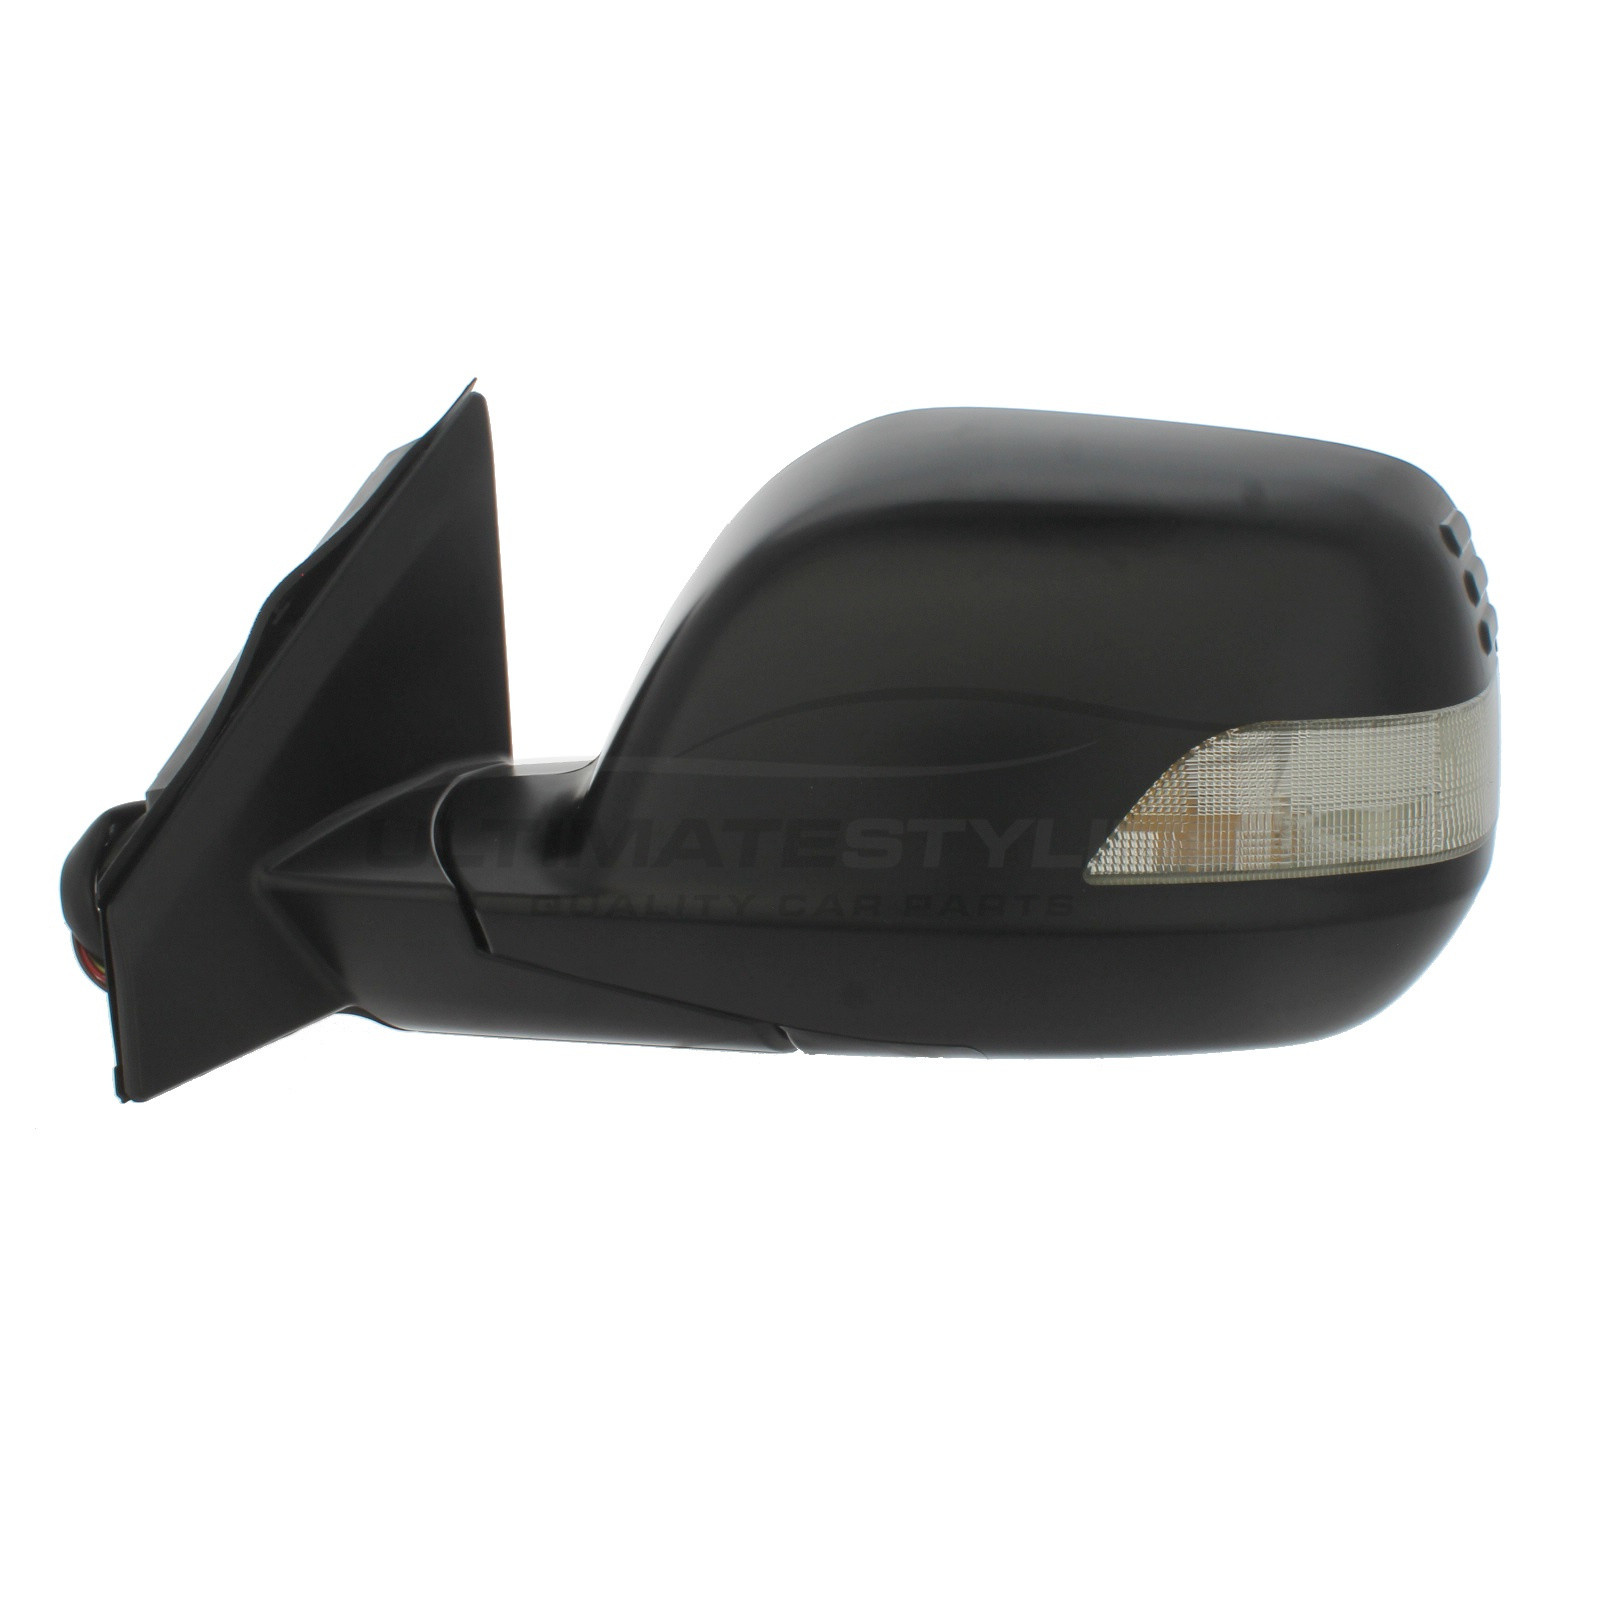 Honda CR-V Wing Mirror / Door Mirror - Passenger Side (LH) - Electric adjustment - Heated Glass - Indicator - Paintable - Black